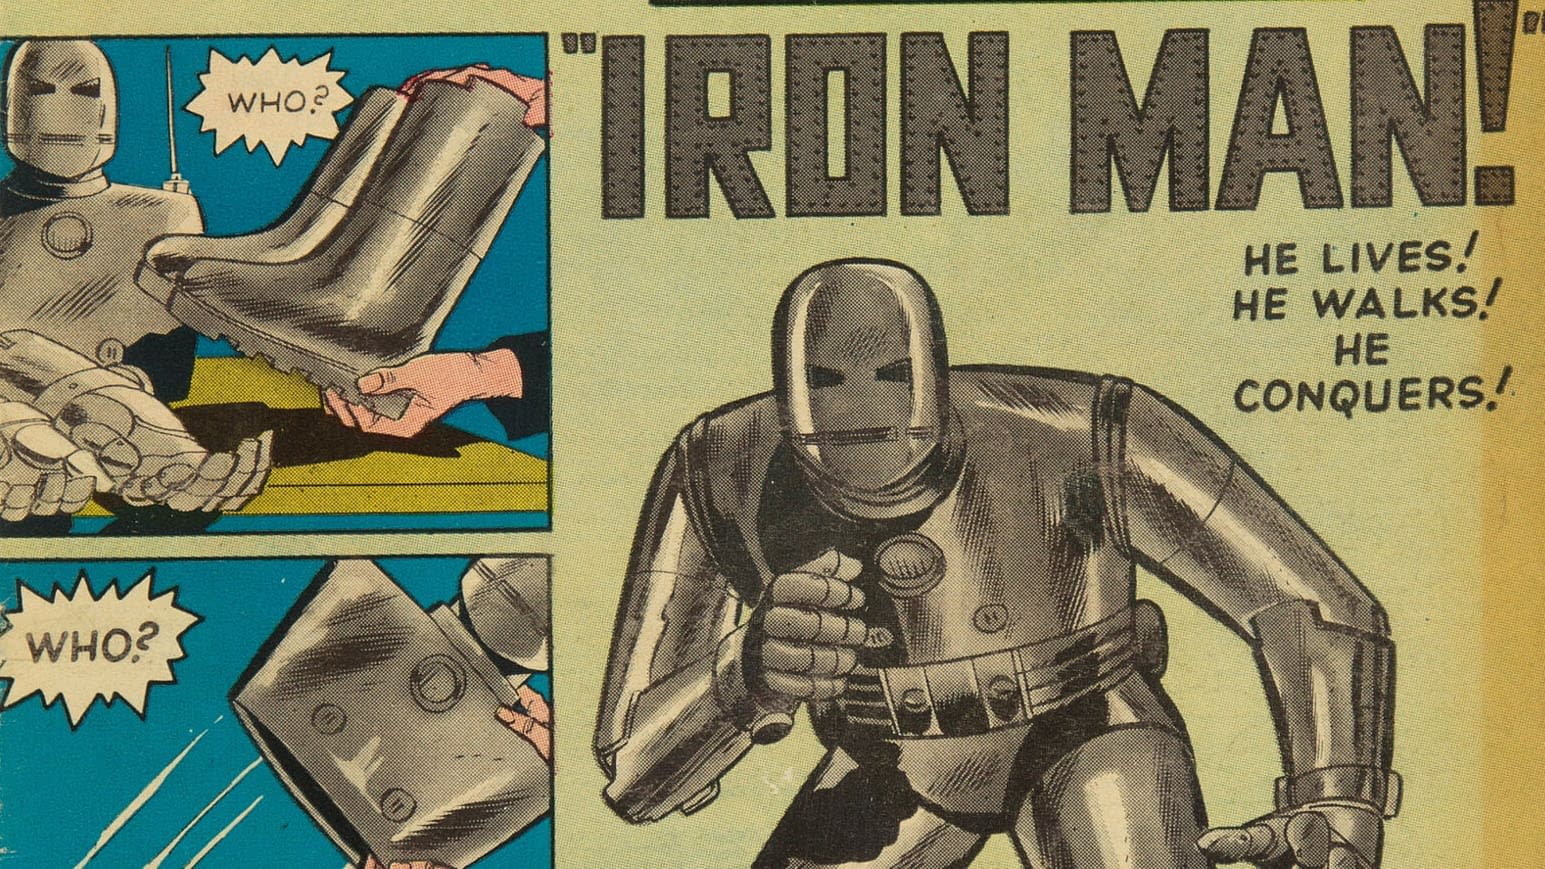 Iron Man in Tales of Suspense #39, 